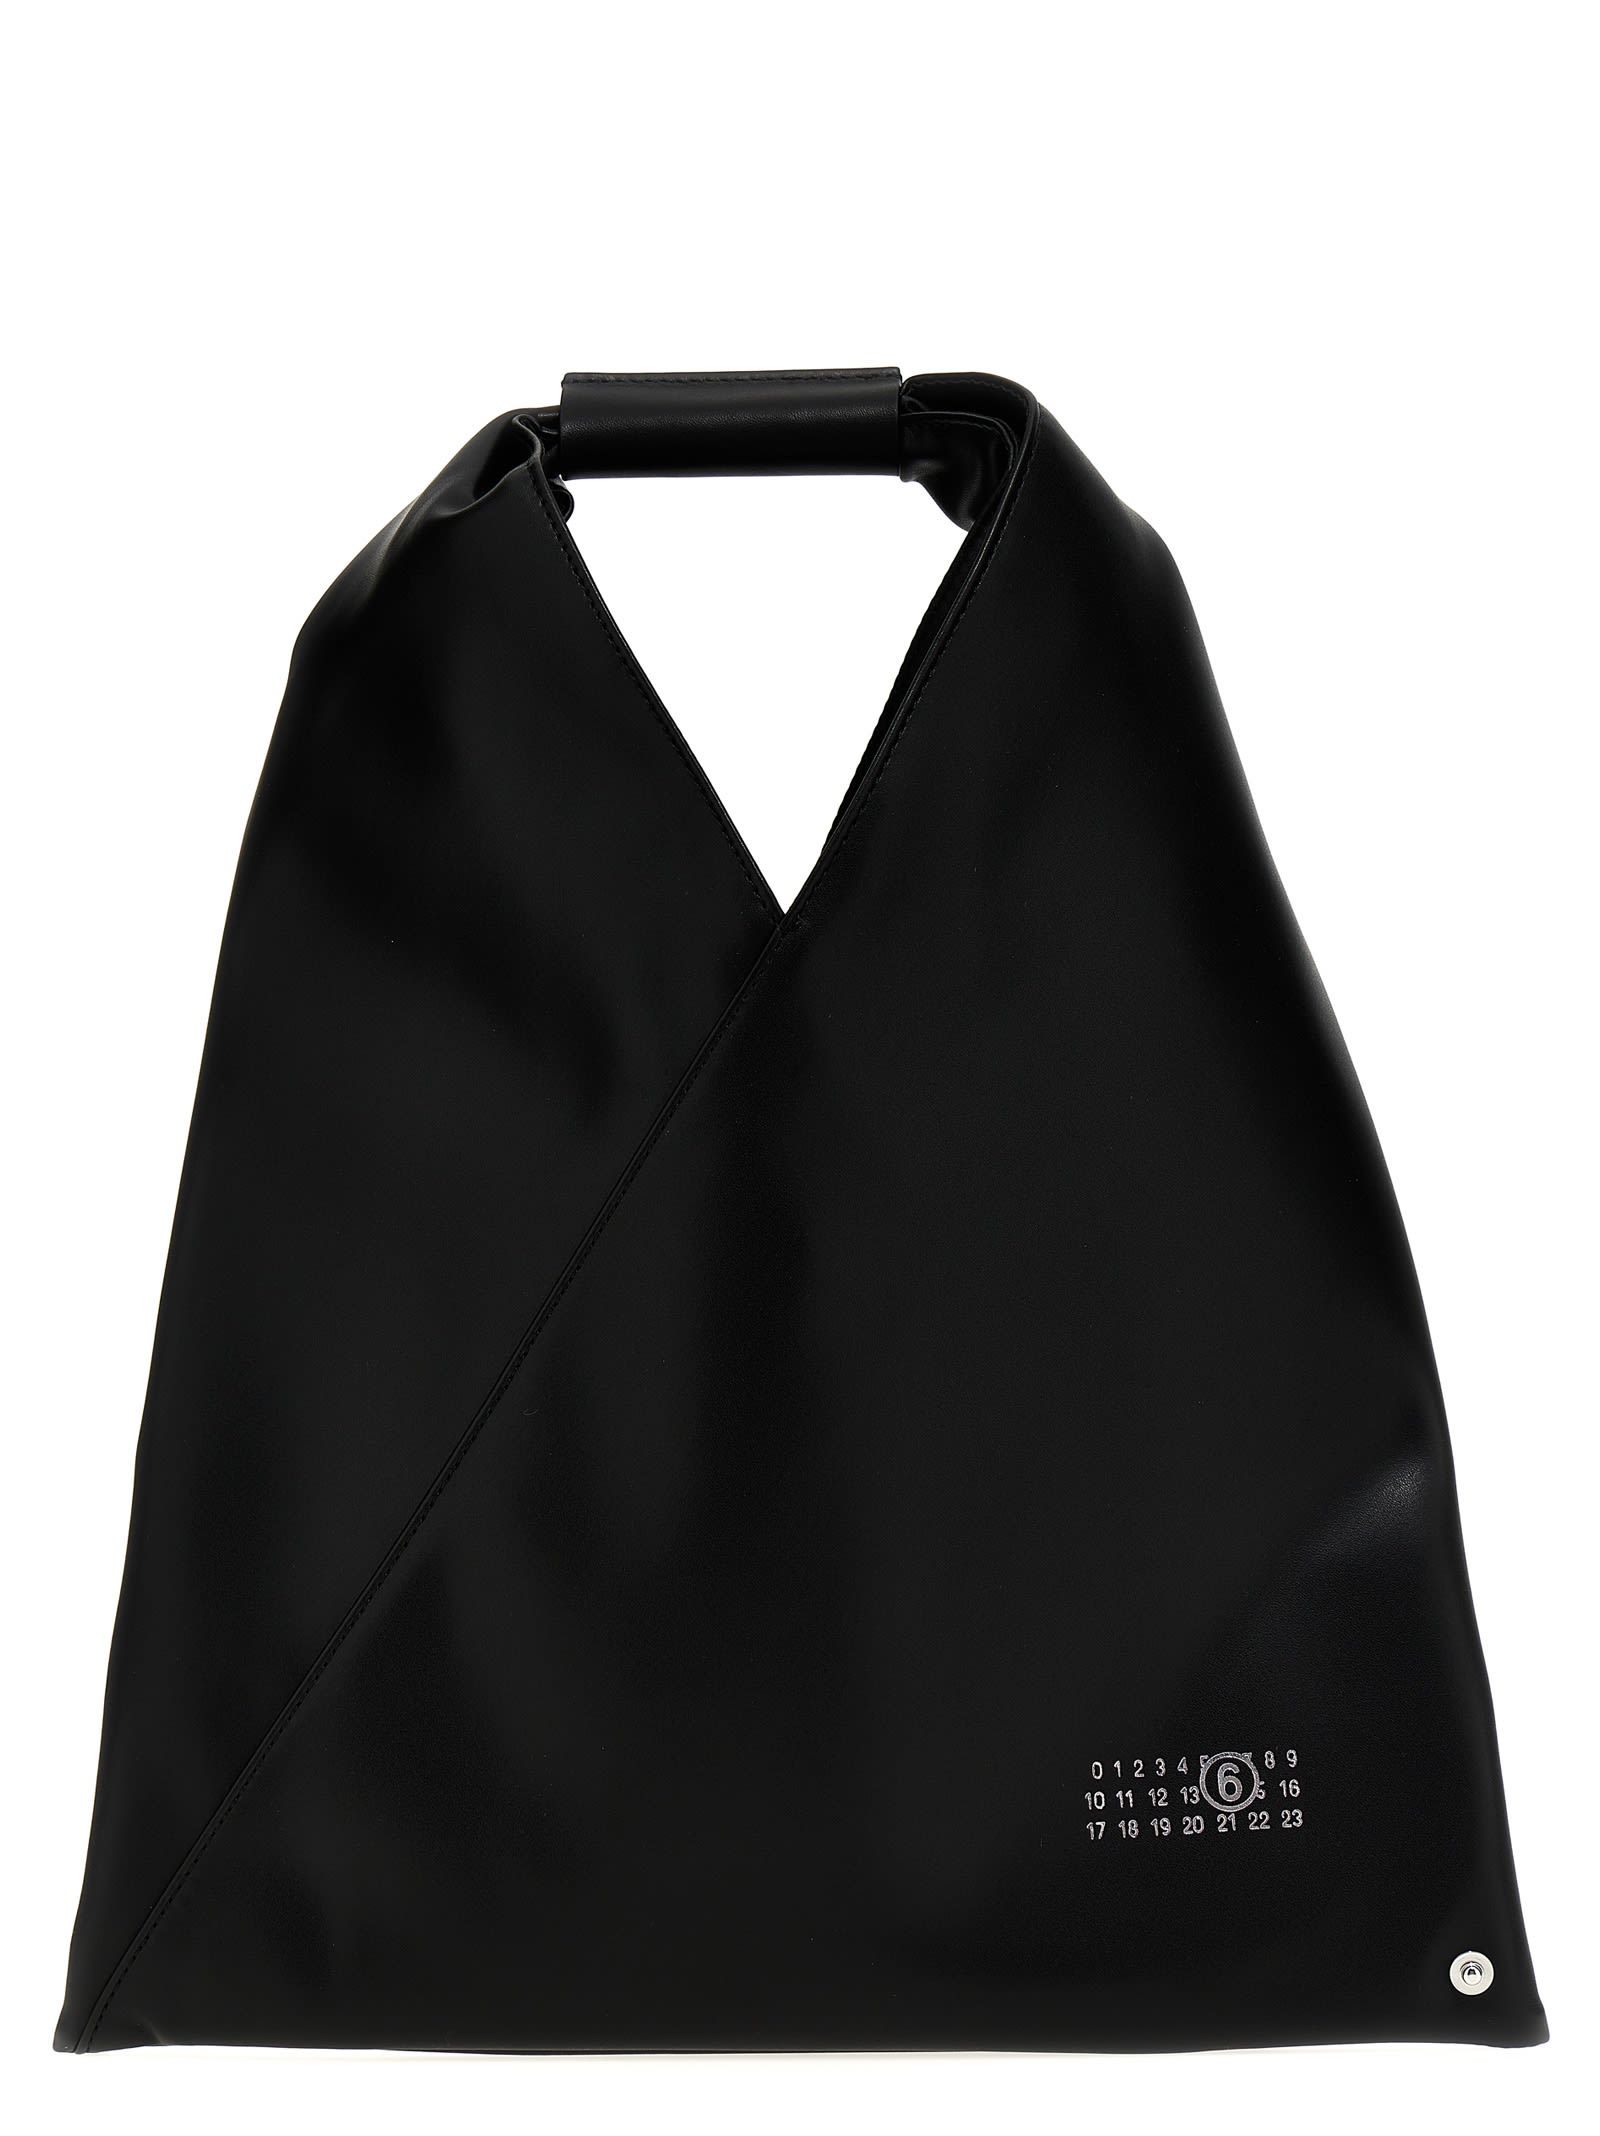 MM6 MAISON MARGIELA JAPANESE BAG CLASSIC SMALL SHOULDER BAG